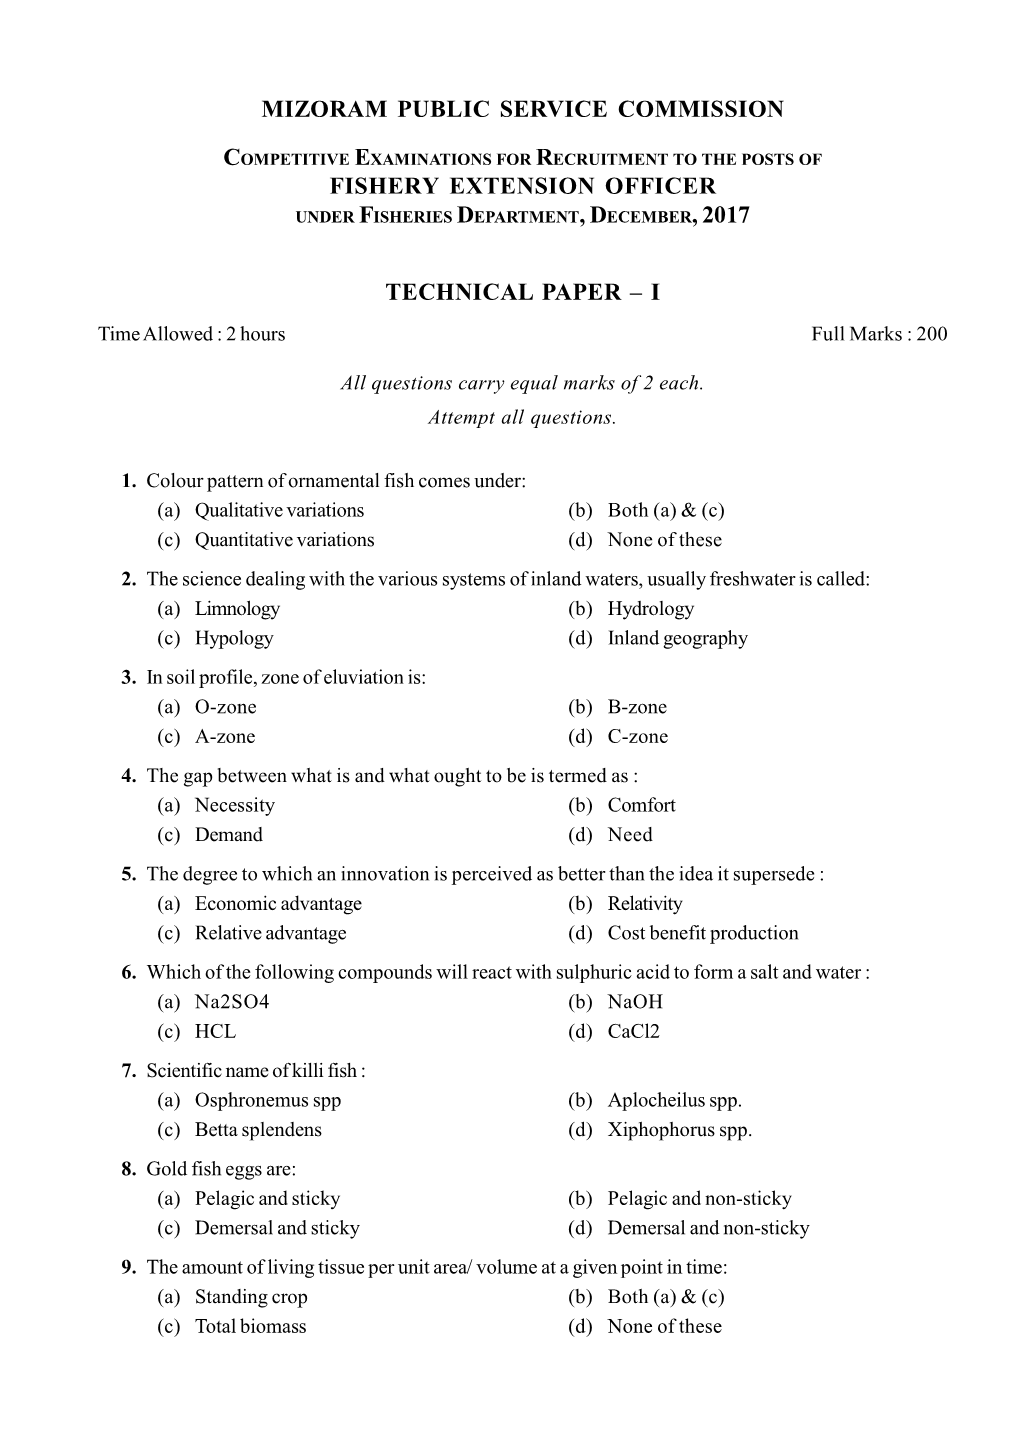 3.Technical Paper I